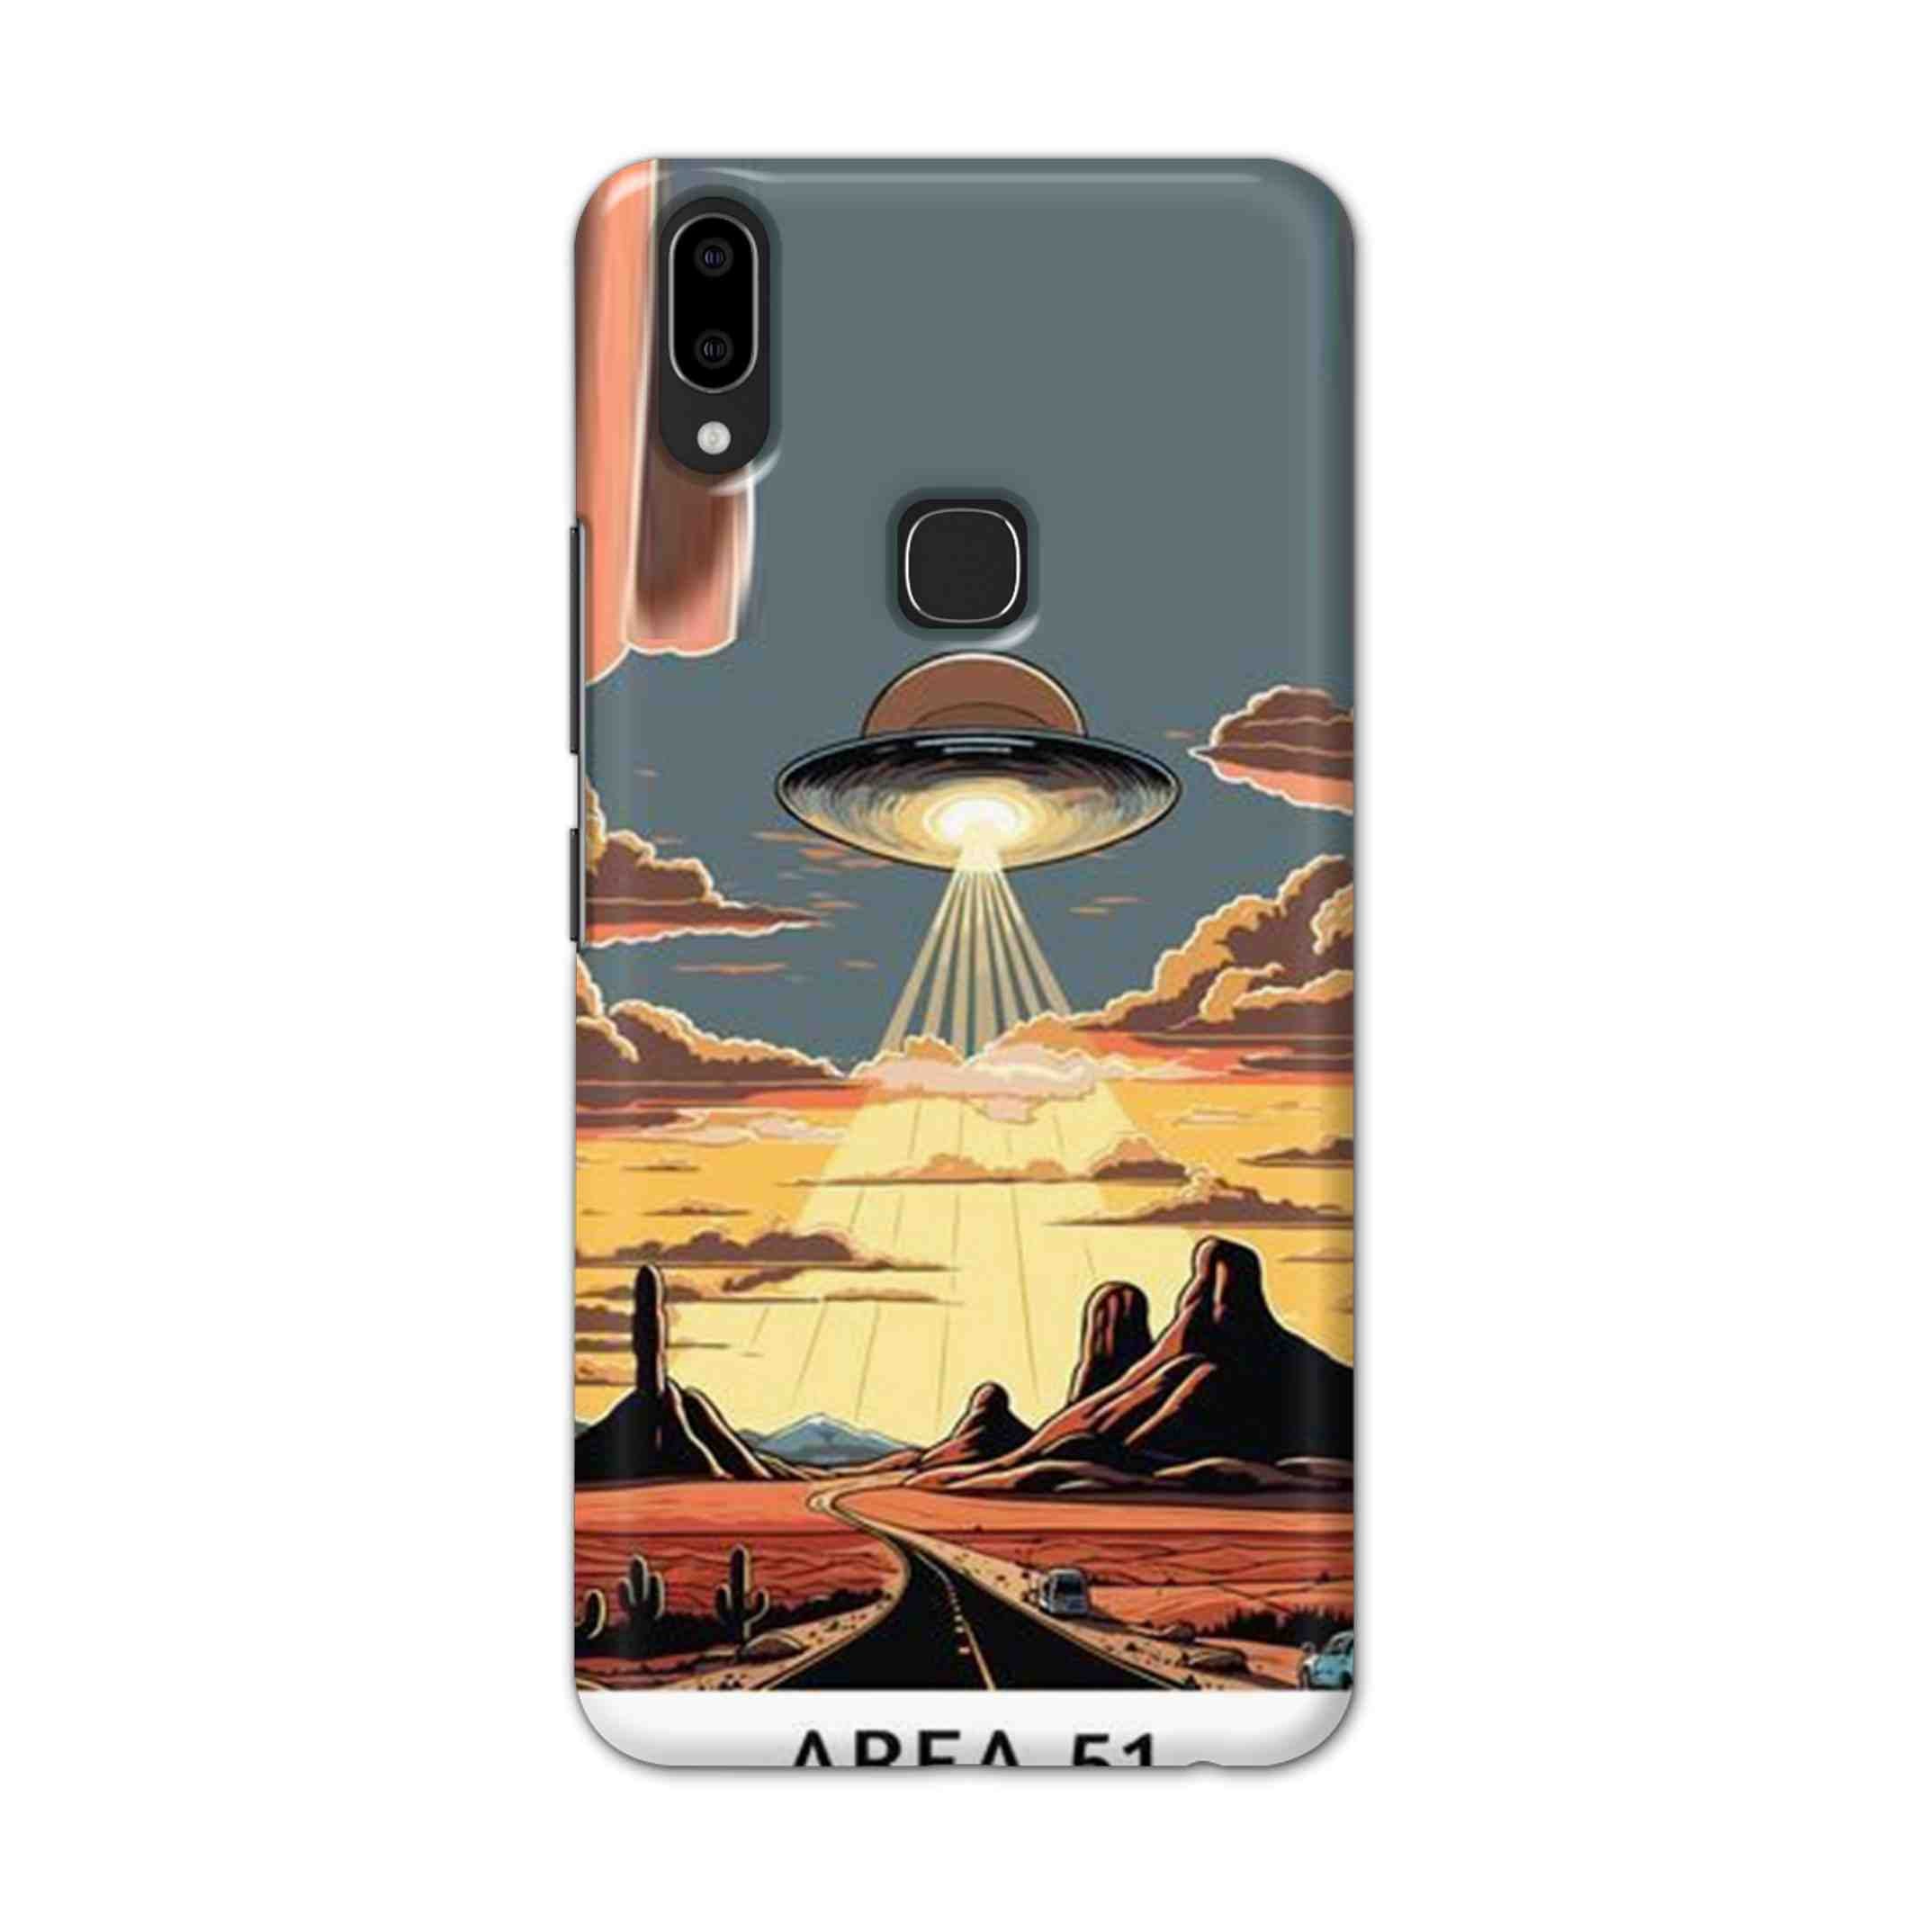 Buy Area 51 Hard Back Mobile Phone Case Cover For Vivo V9 / V9 Youth Online